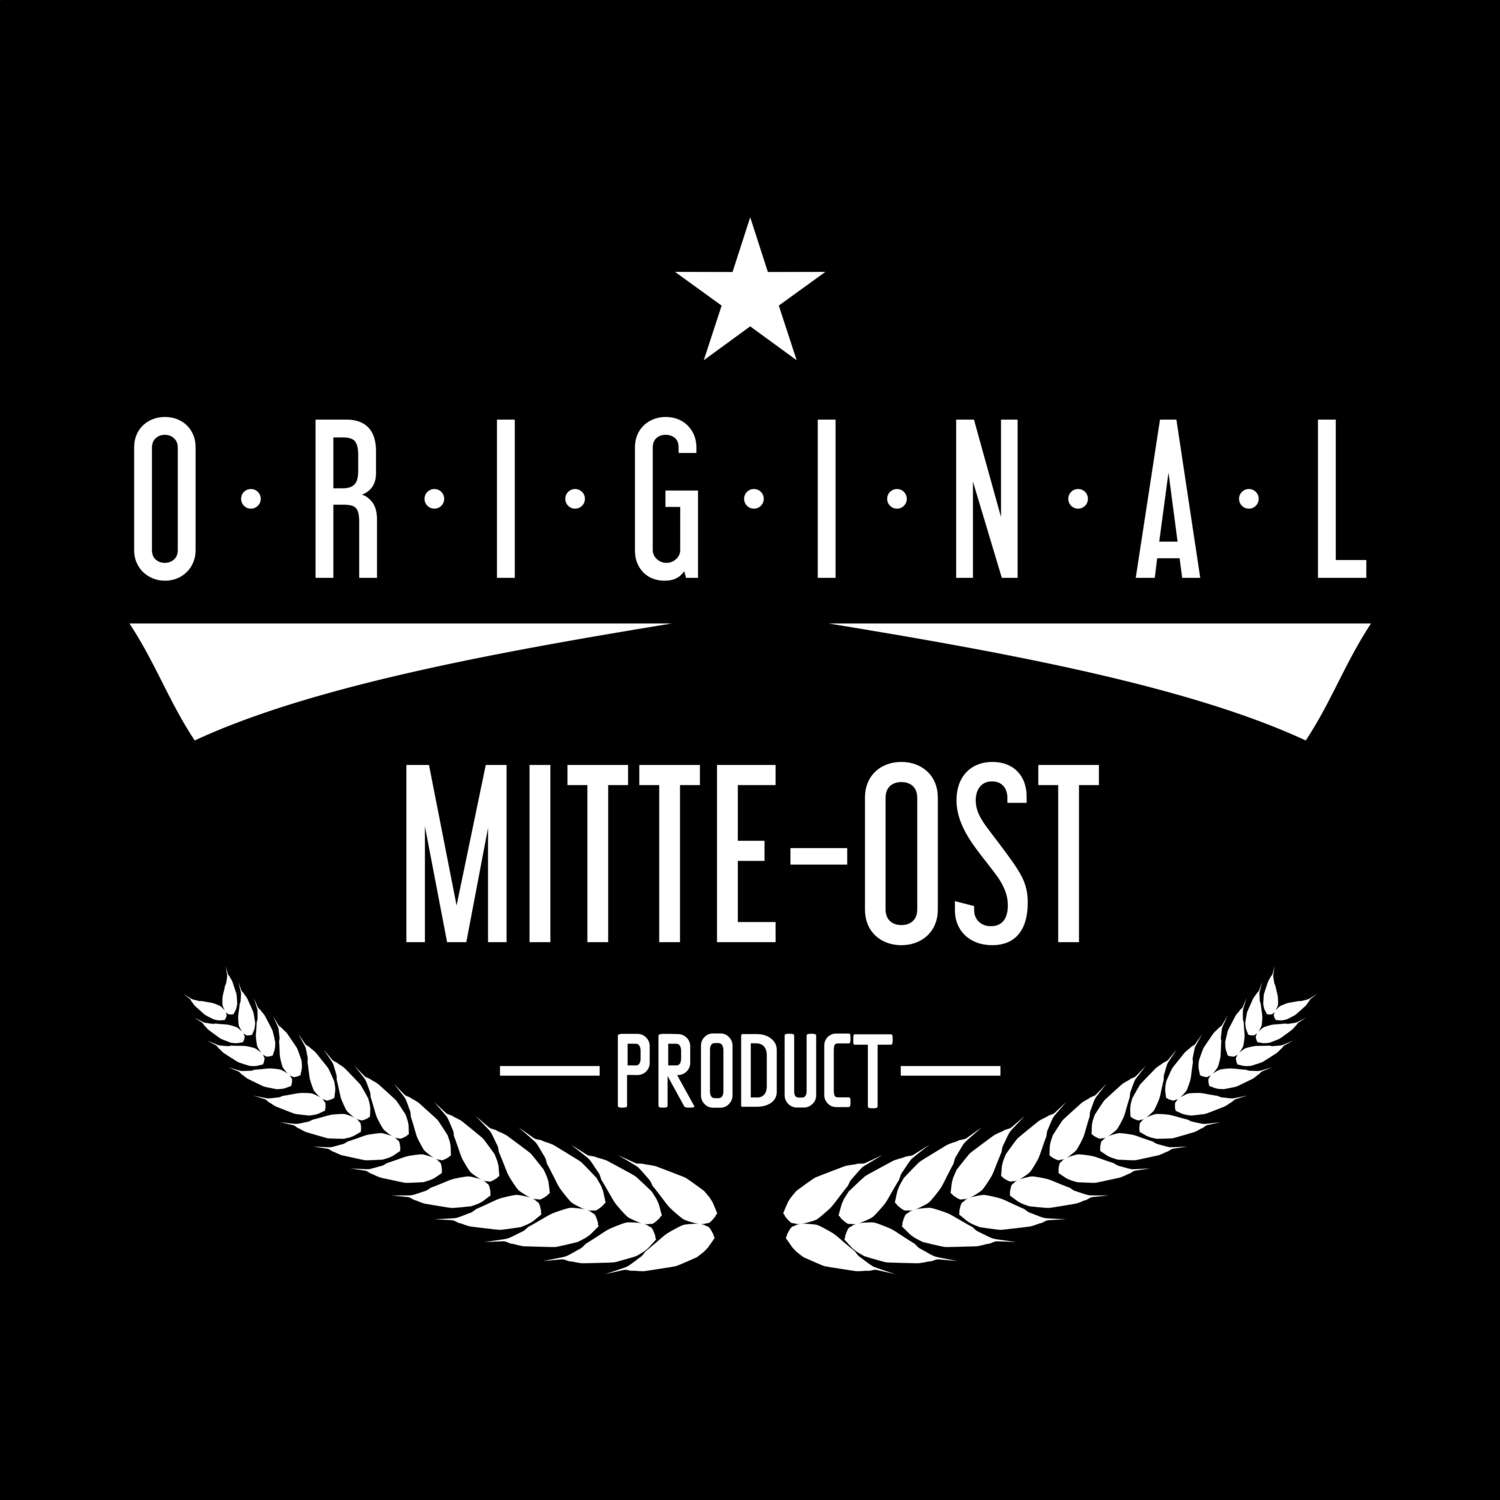 Mitte-Ost T-Shirt »Original Product«